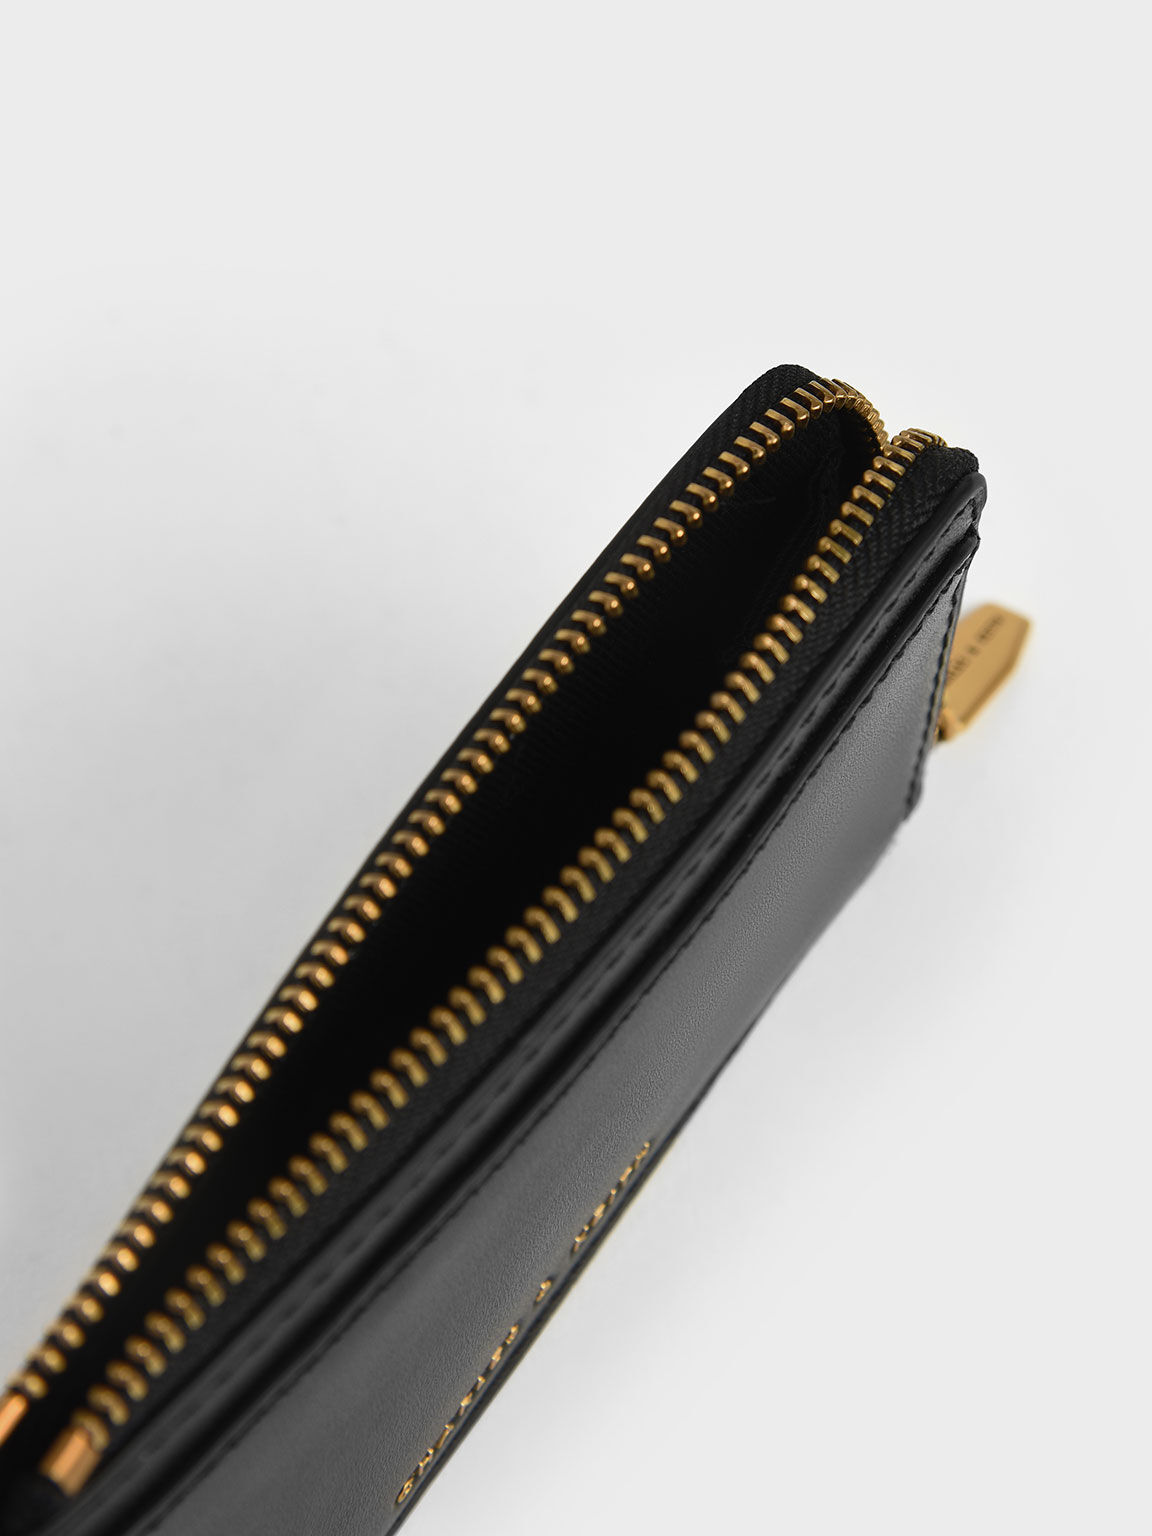 Linear Zip-Around Wristlet Card Holder, Black, hi-res